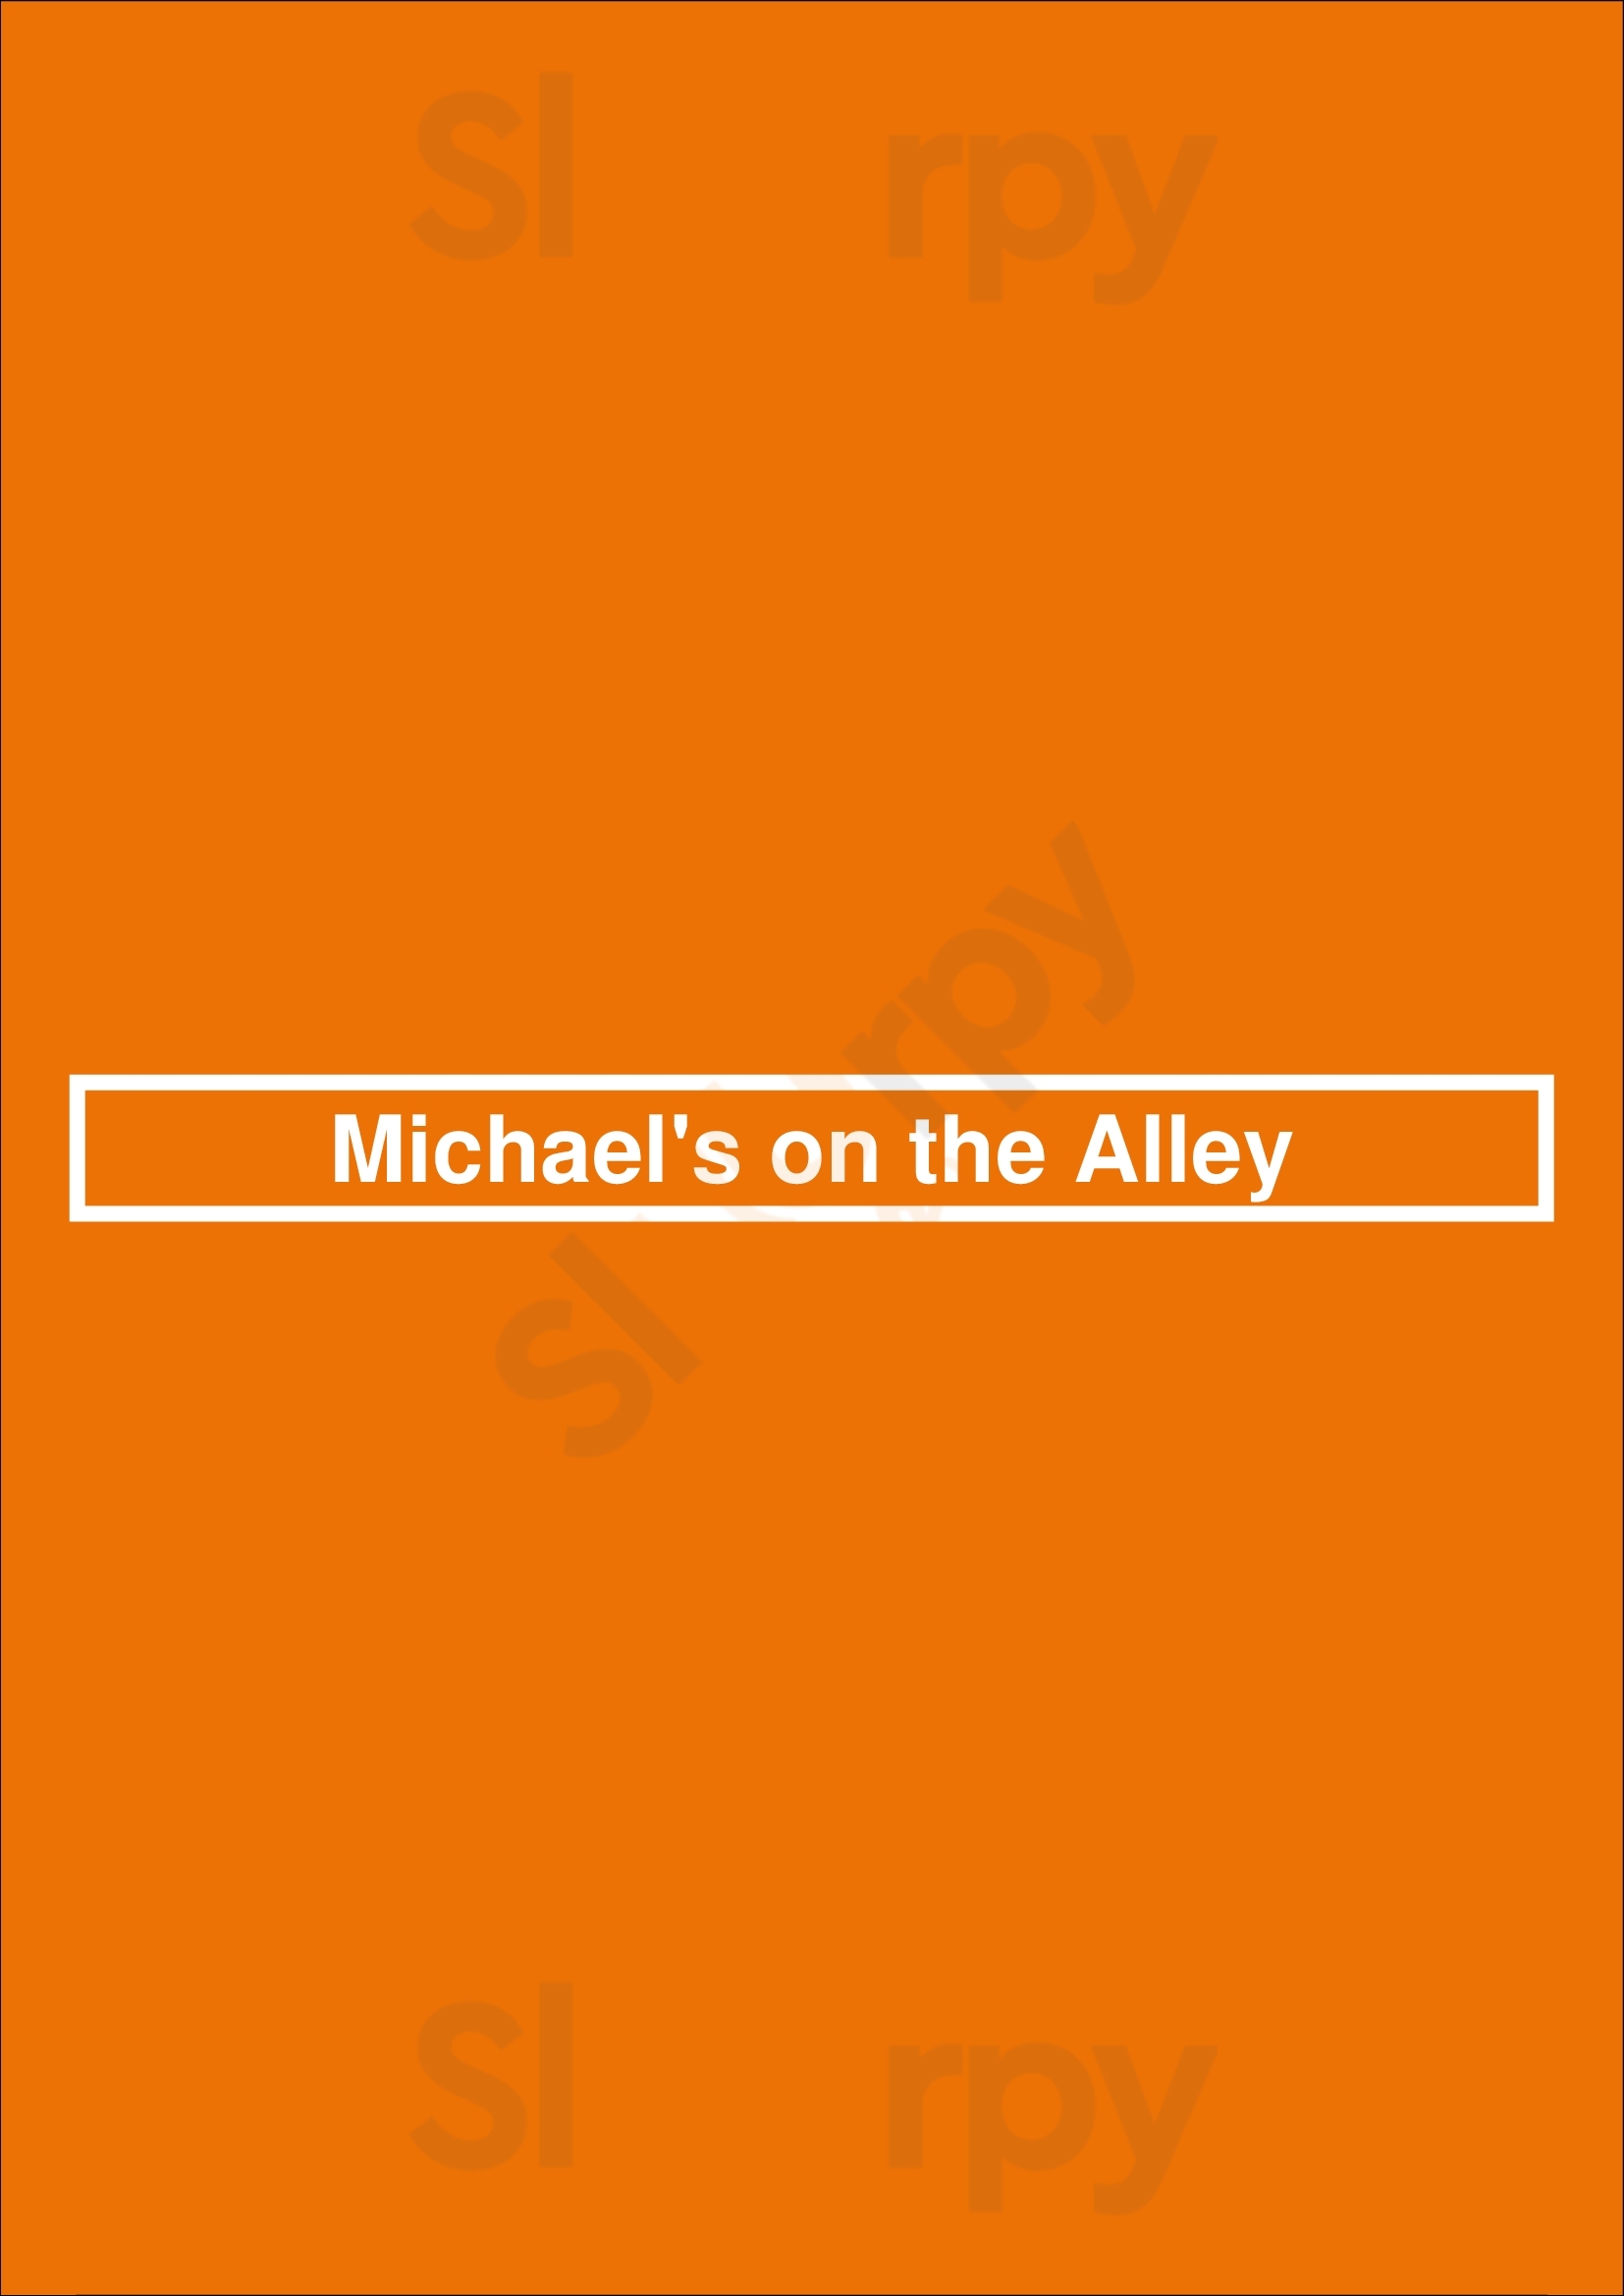 Michael's On The Alley Charleston Menu - 1